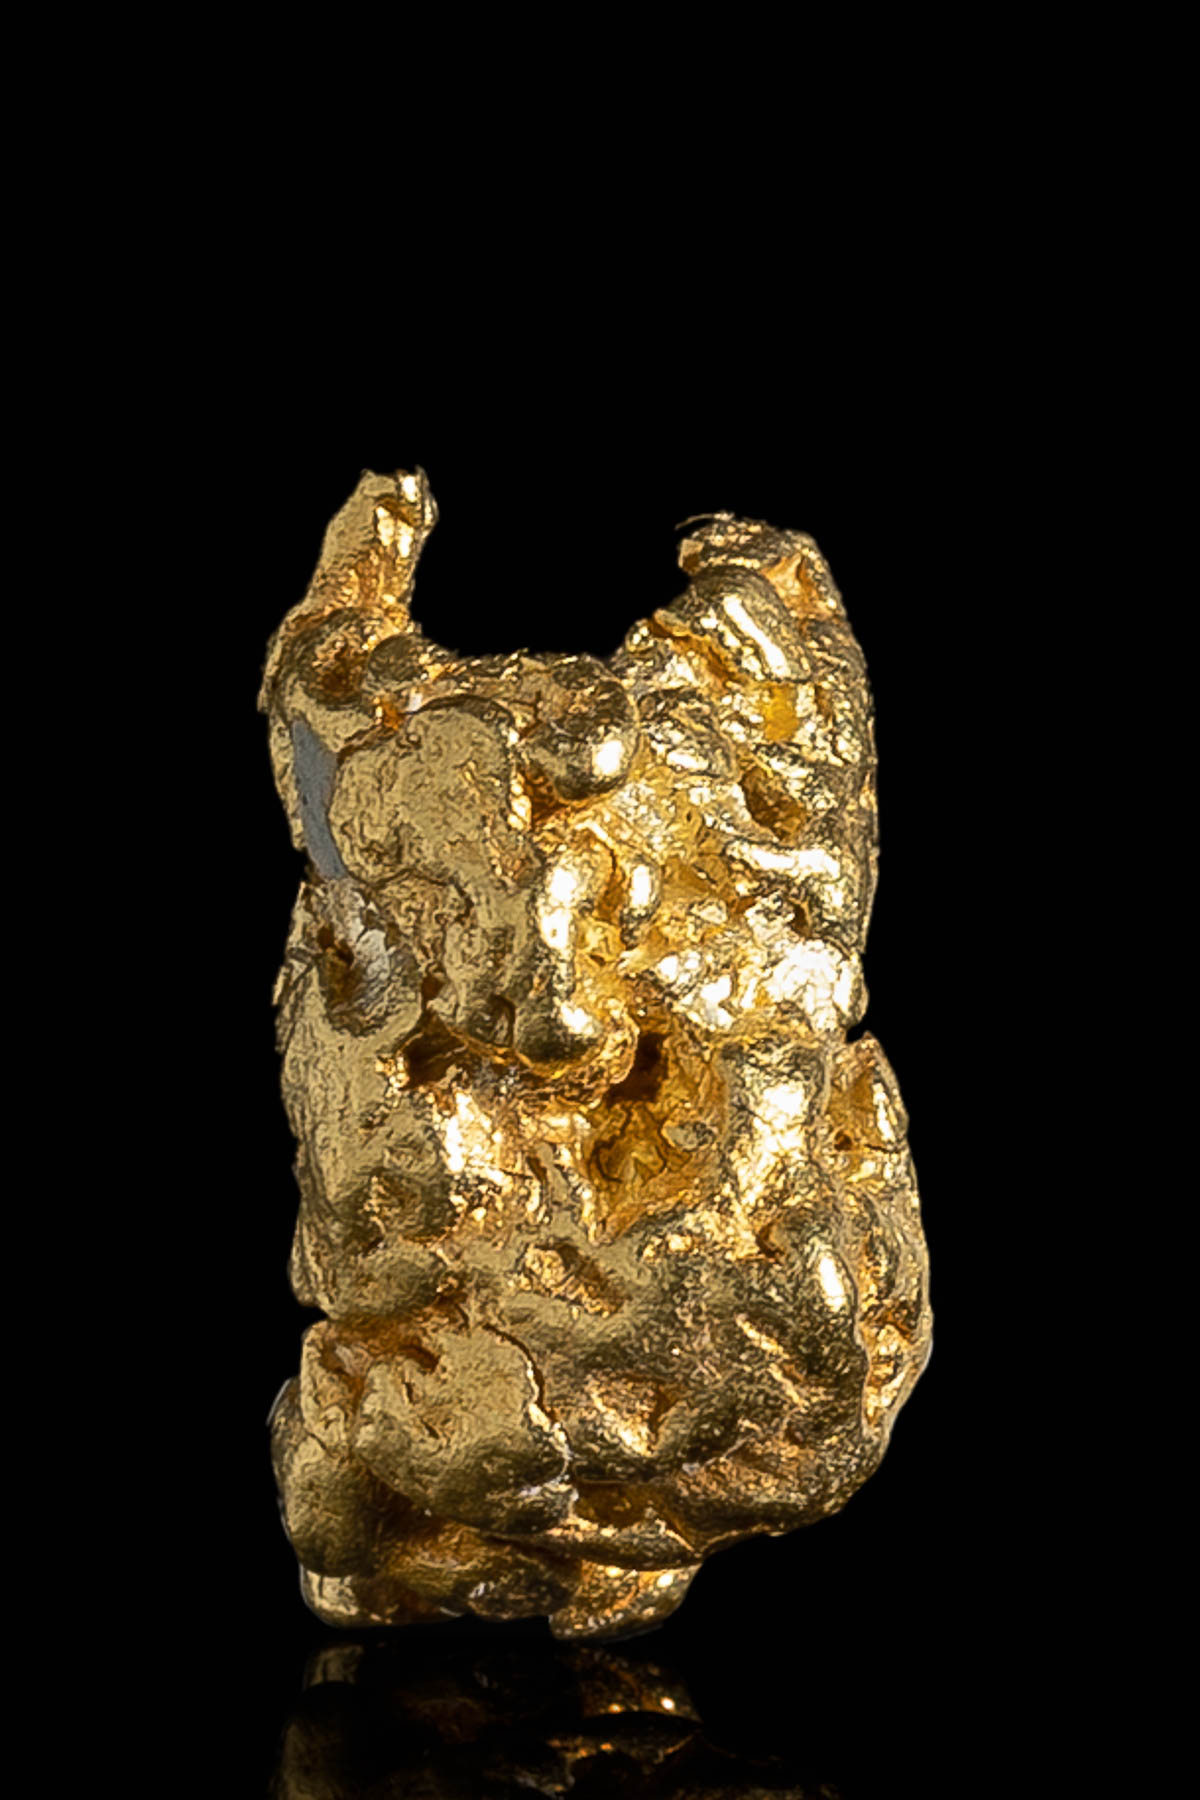 "Double Point" Natural Alaskan Gold Nugget - 2021 Mining Season